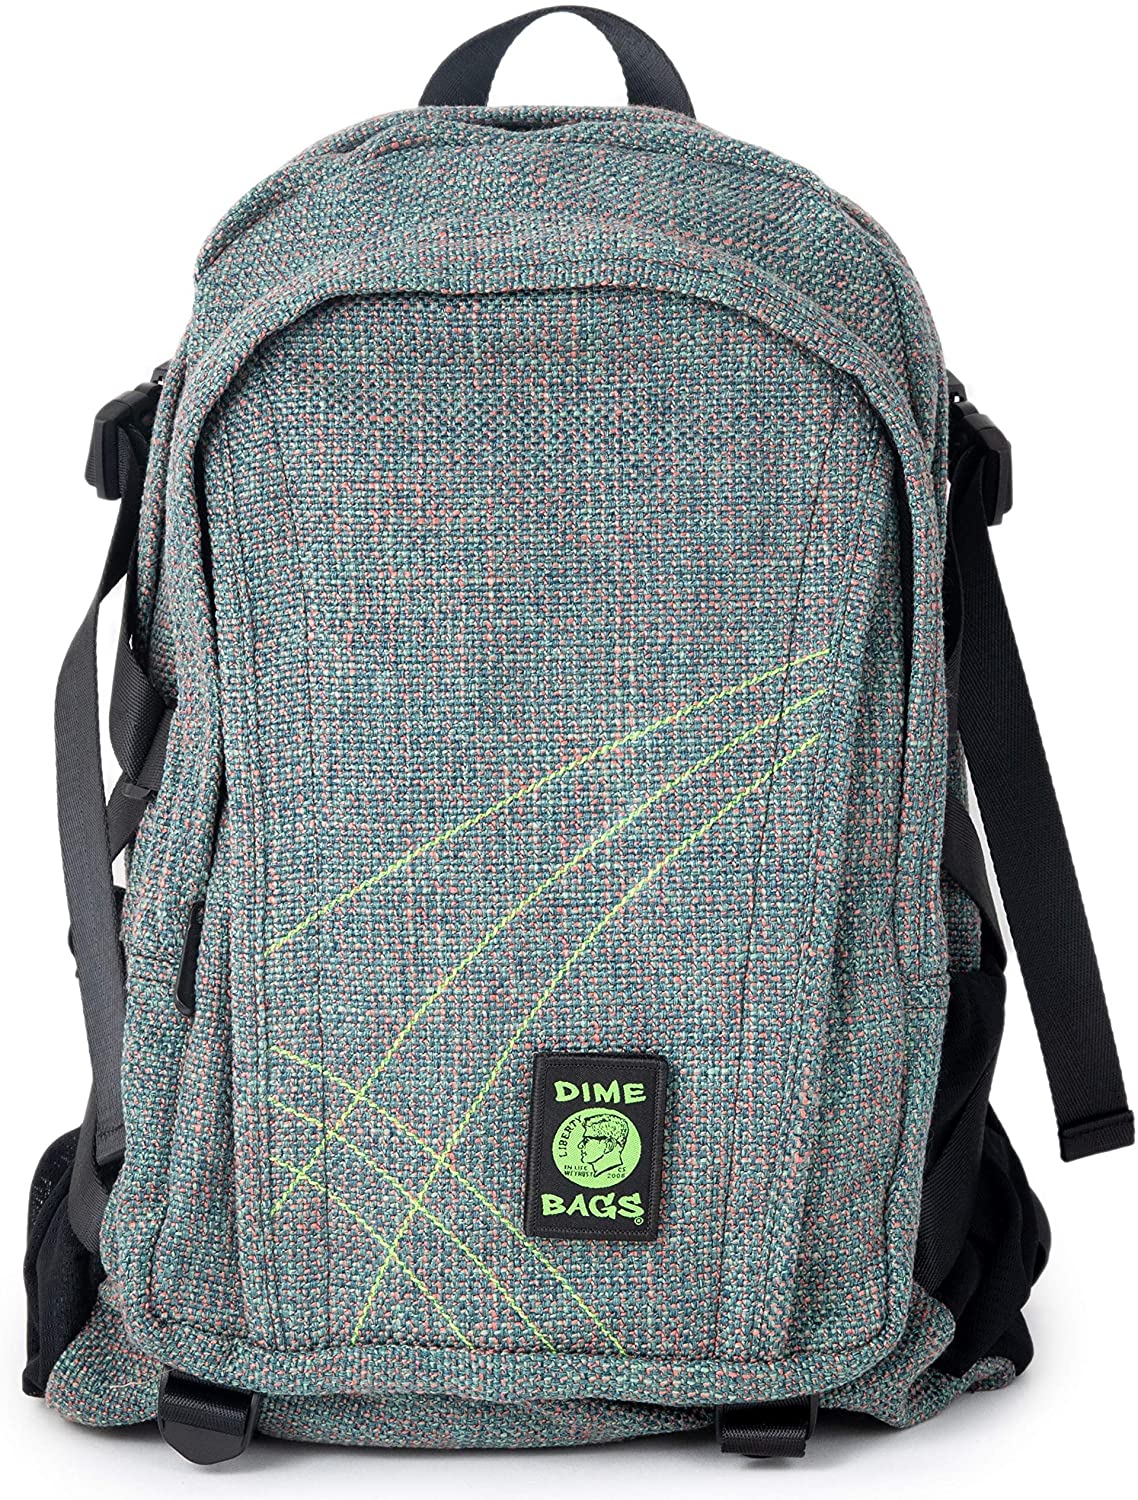 Dime Bags Urban Hemp Backpack Best Backpacks with Hidden Pockets